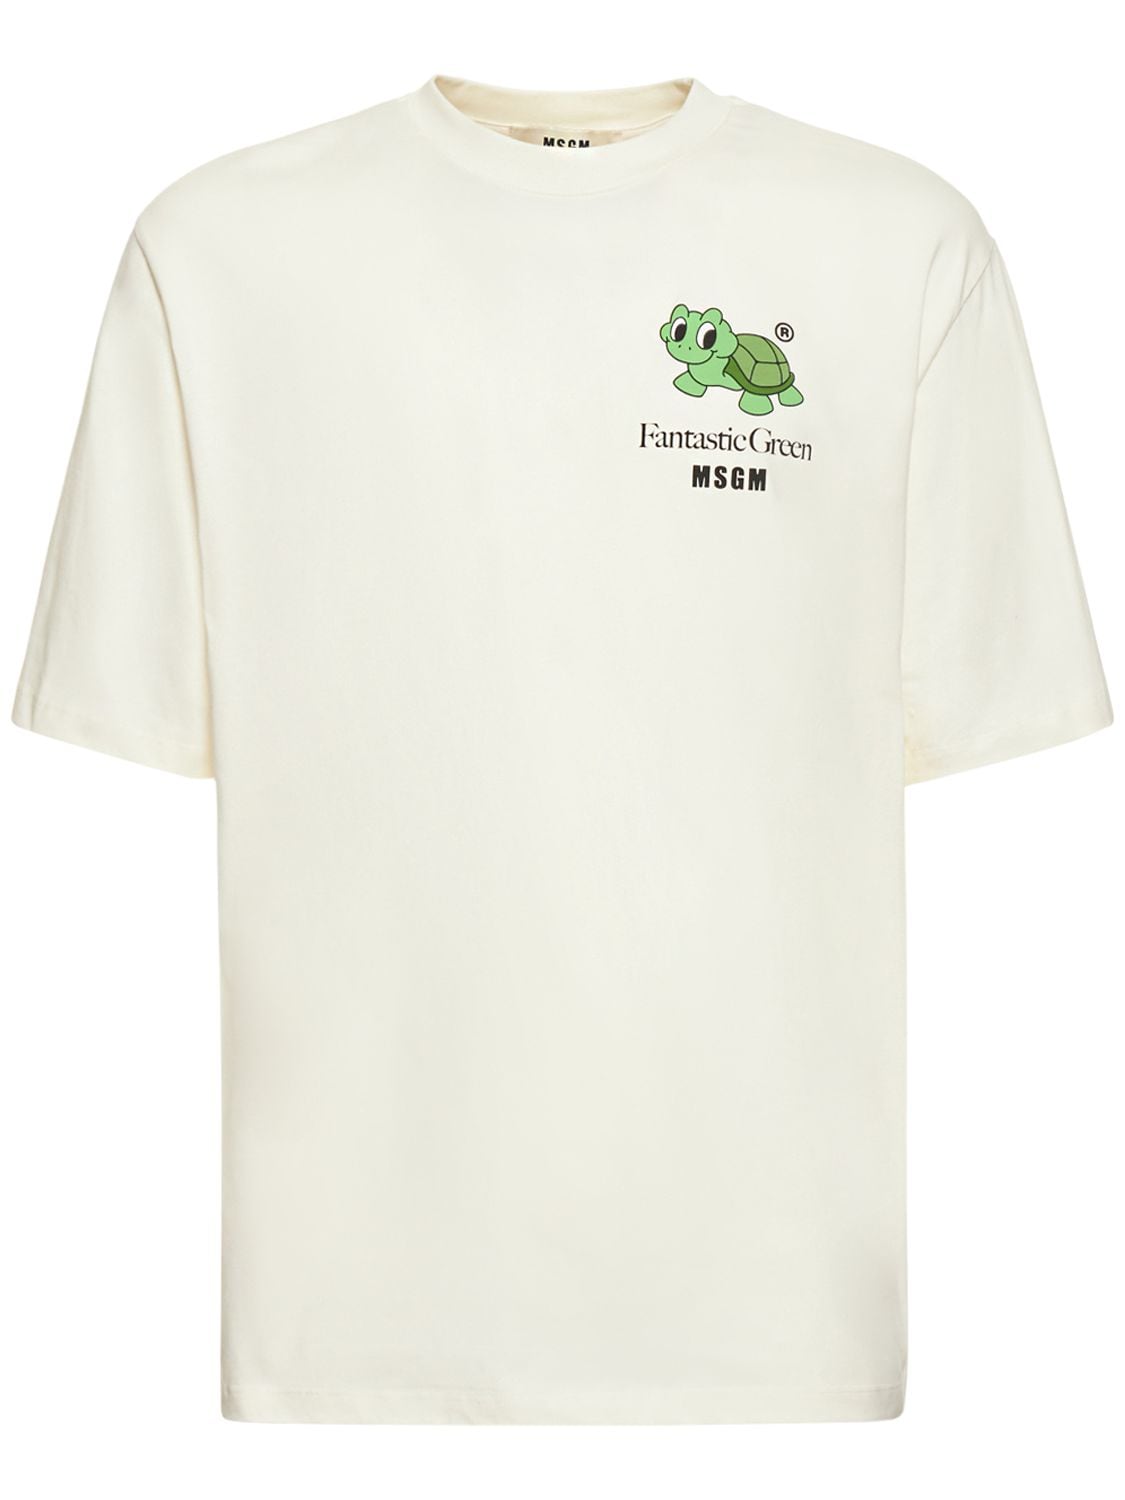 Fantastic Green Organic Cotton T-shirt